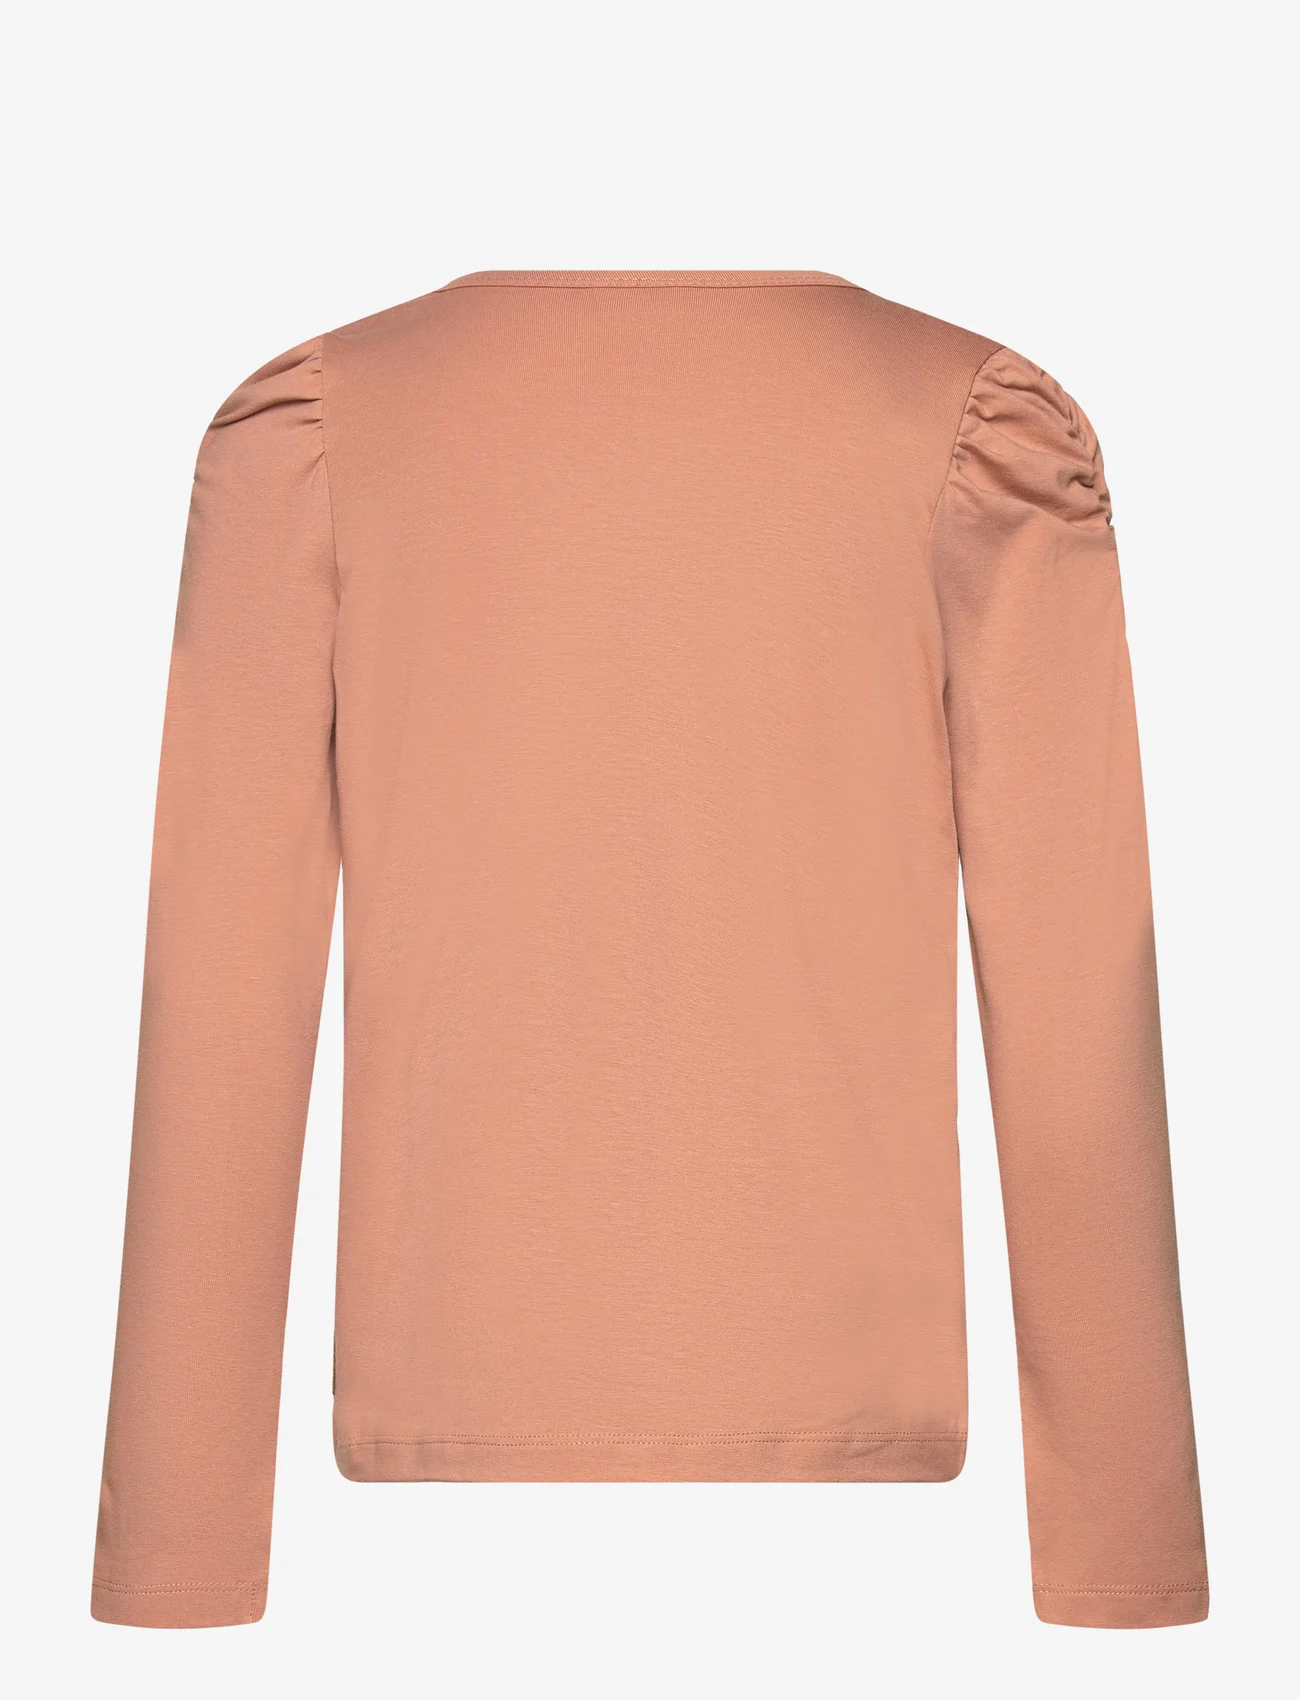 Hust & Claire - Angela - T-shirt - pitkähihaiset t-paidat - cafÉ rose - 1